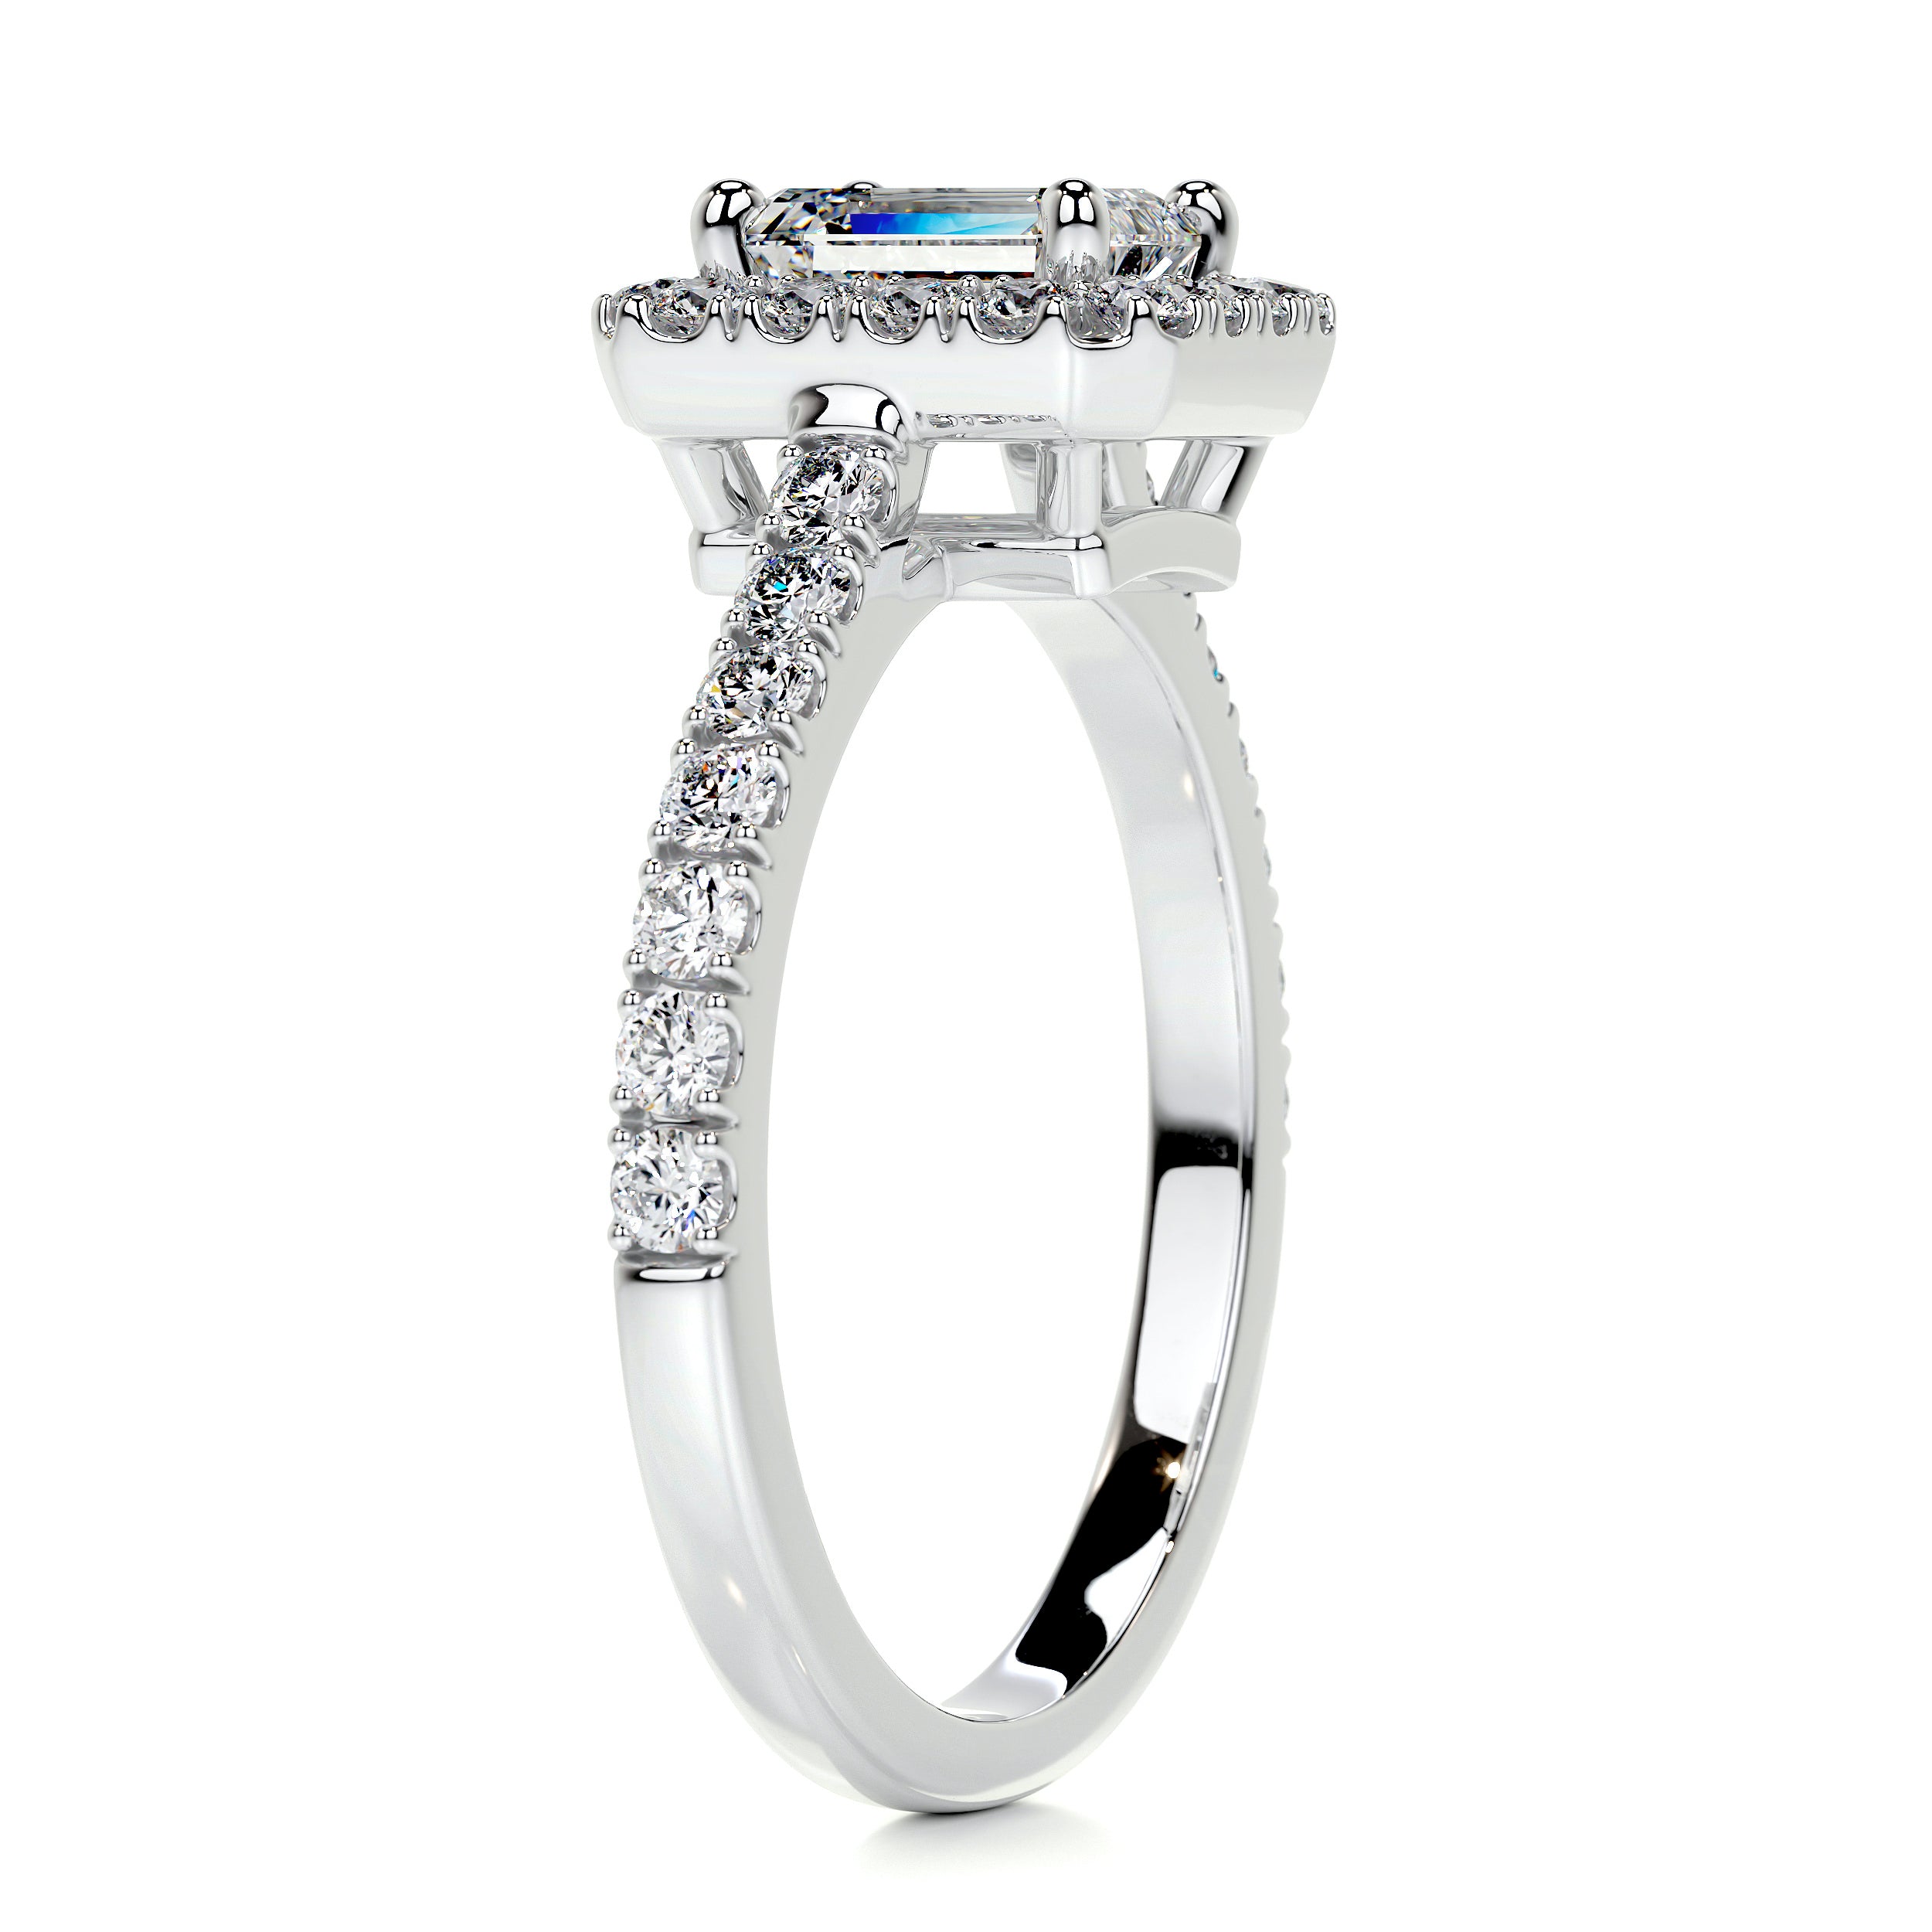 Zoey Diamond Engagement Ring   (1.5 Carat) -18K White Gold